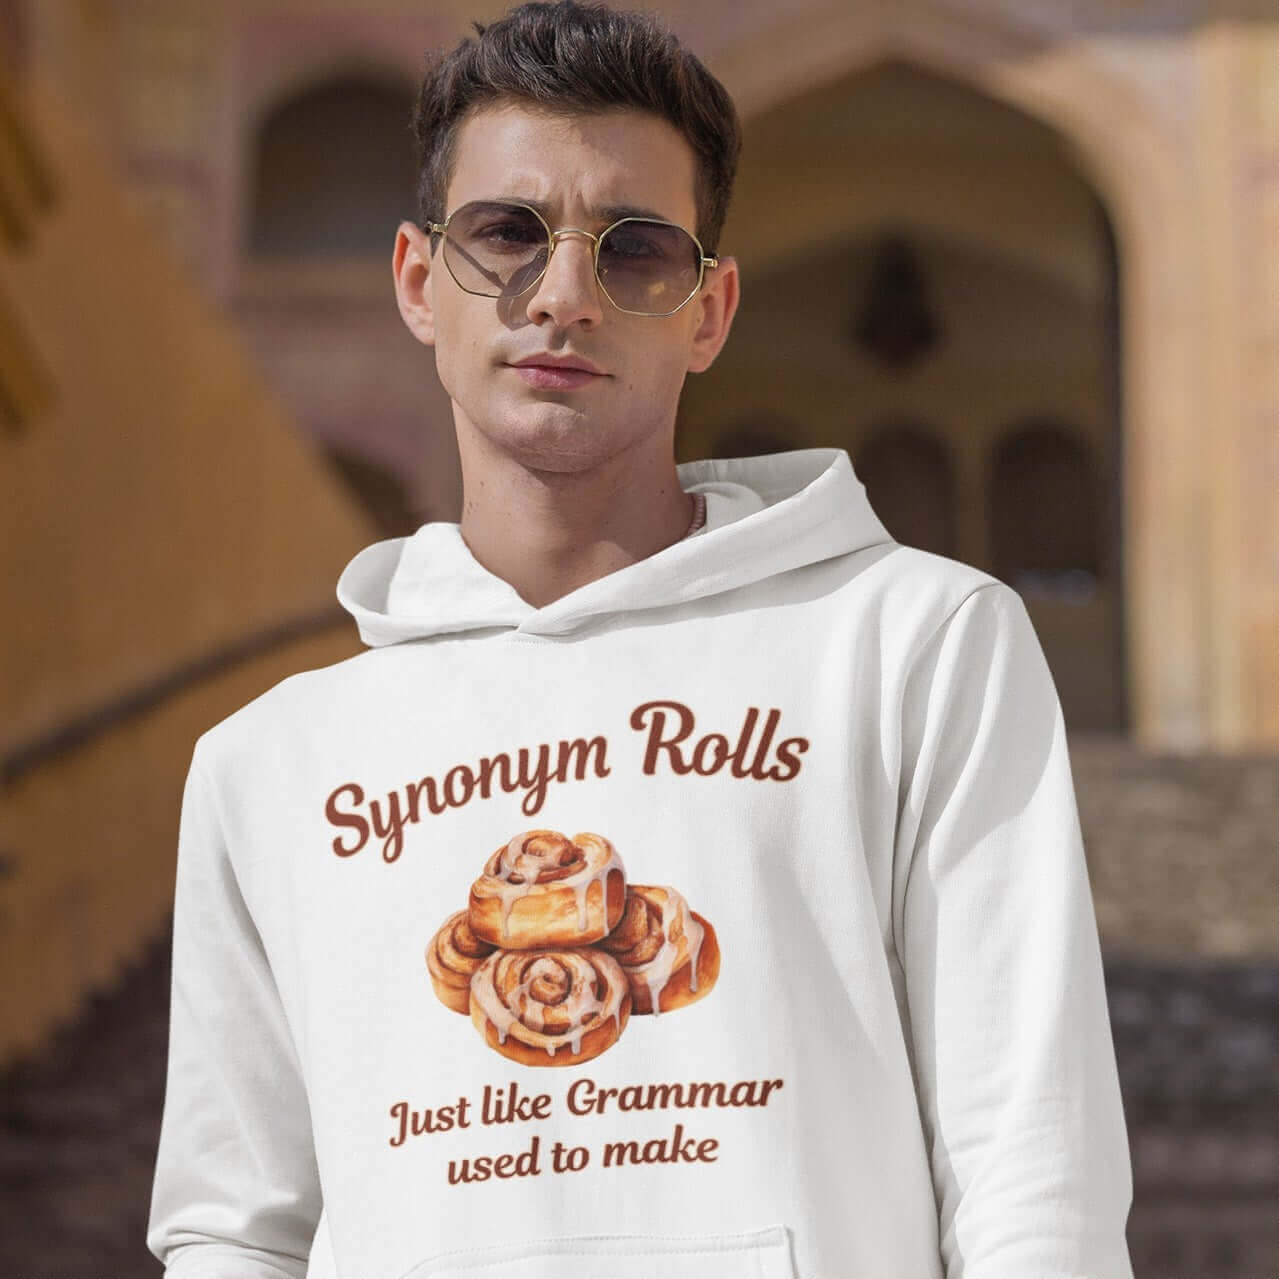 Cinnamon rolls funny pun hoodie. Synonym rolls hooded sweatshirt